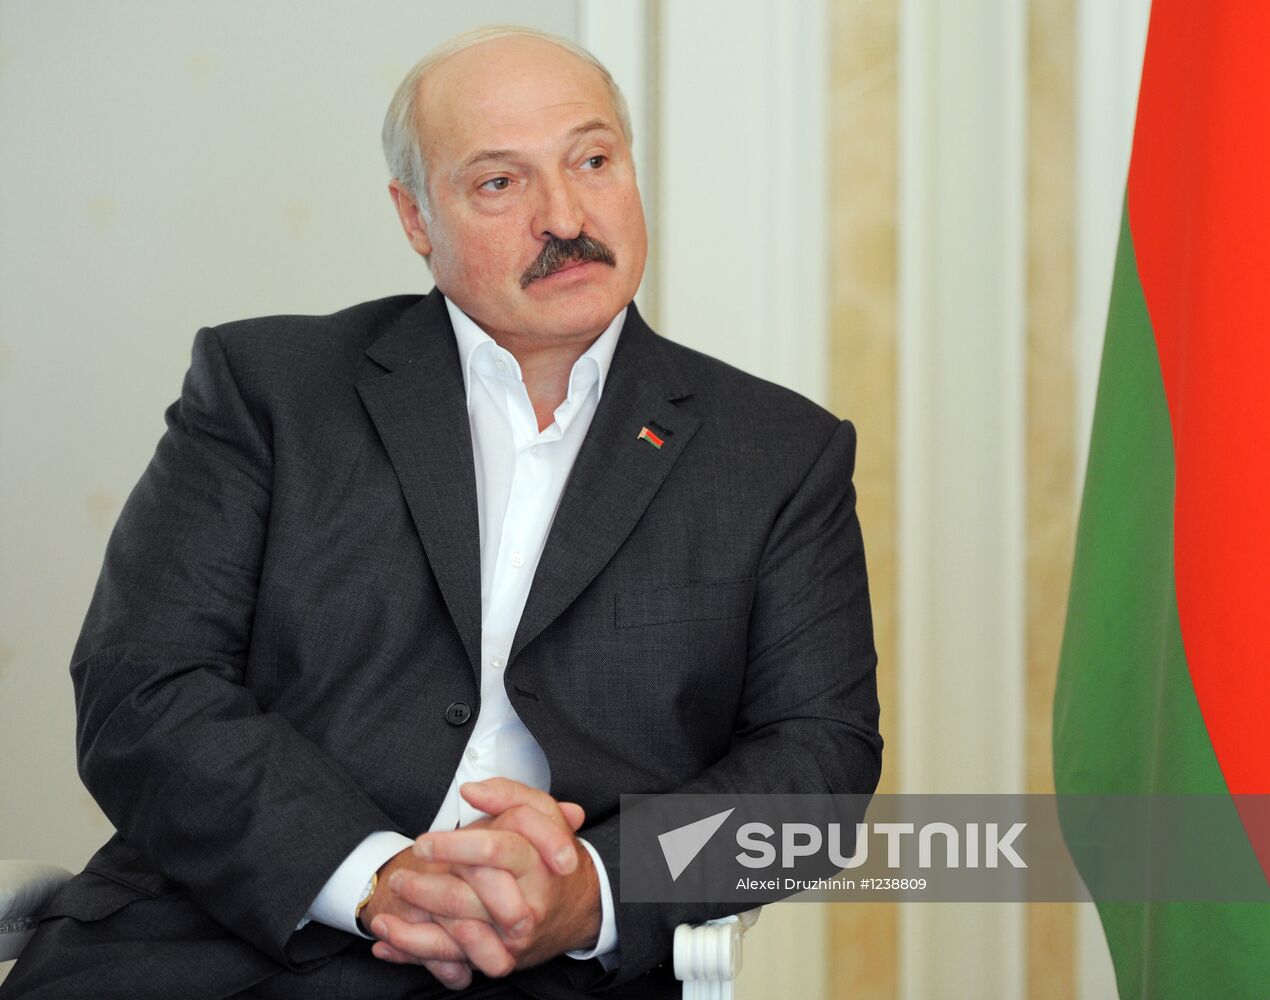 Vladimir Putin meets with Alexander Lukashenko